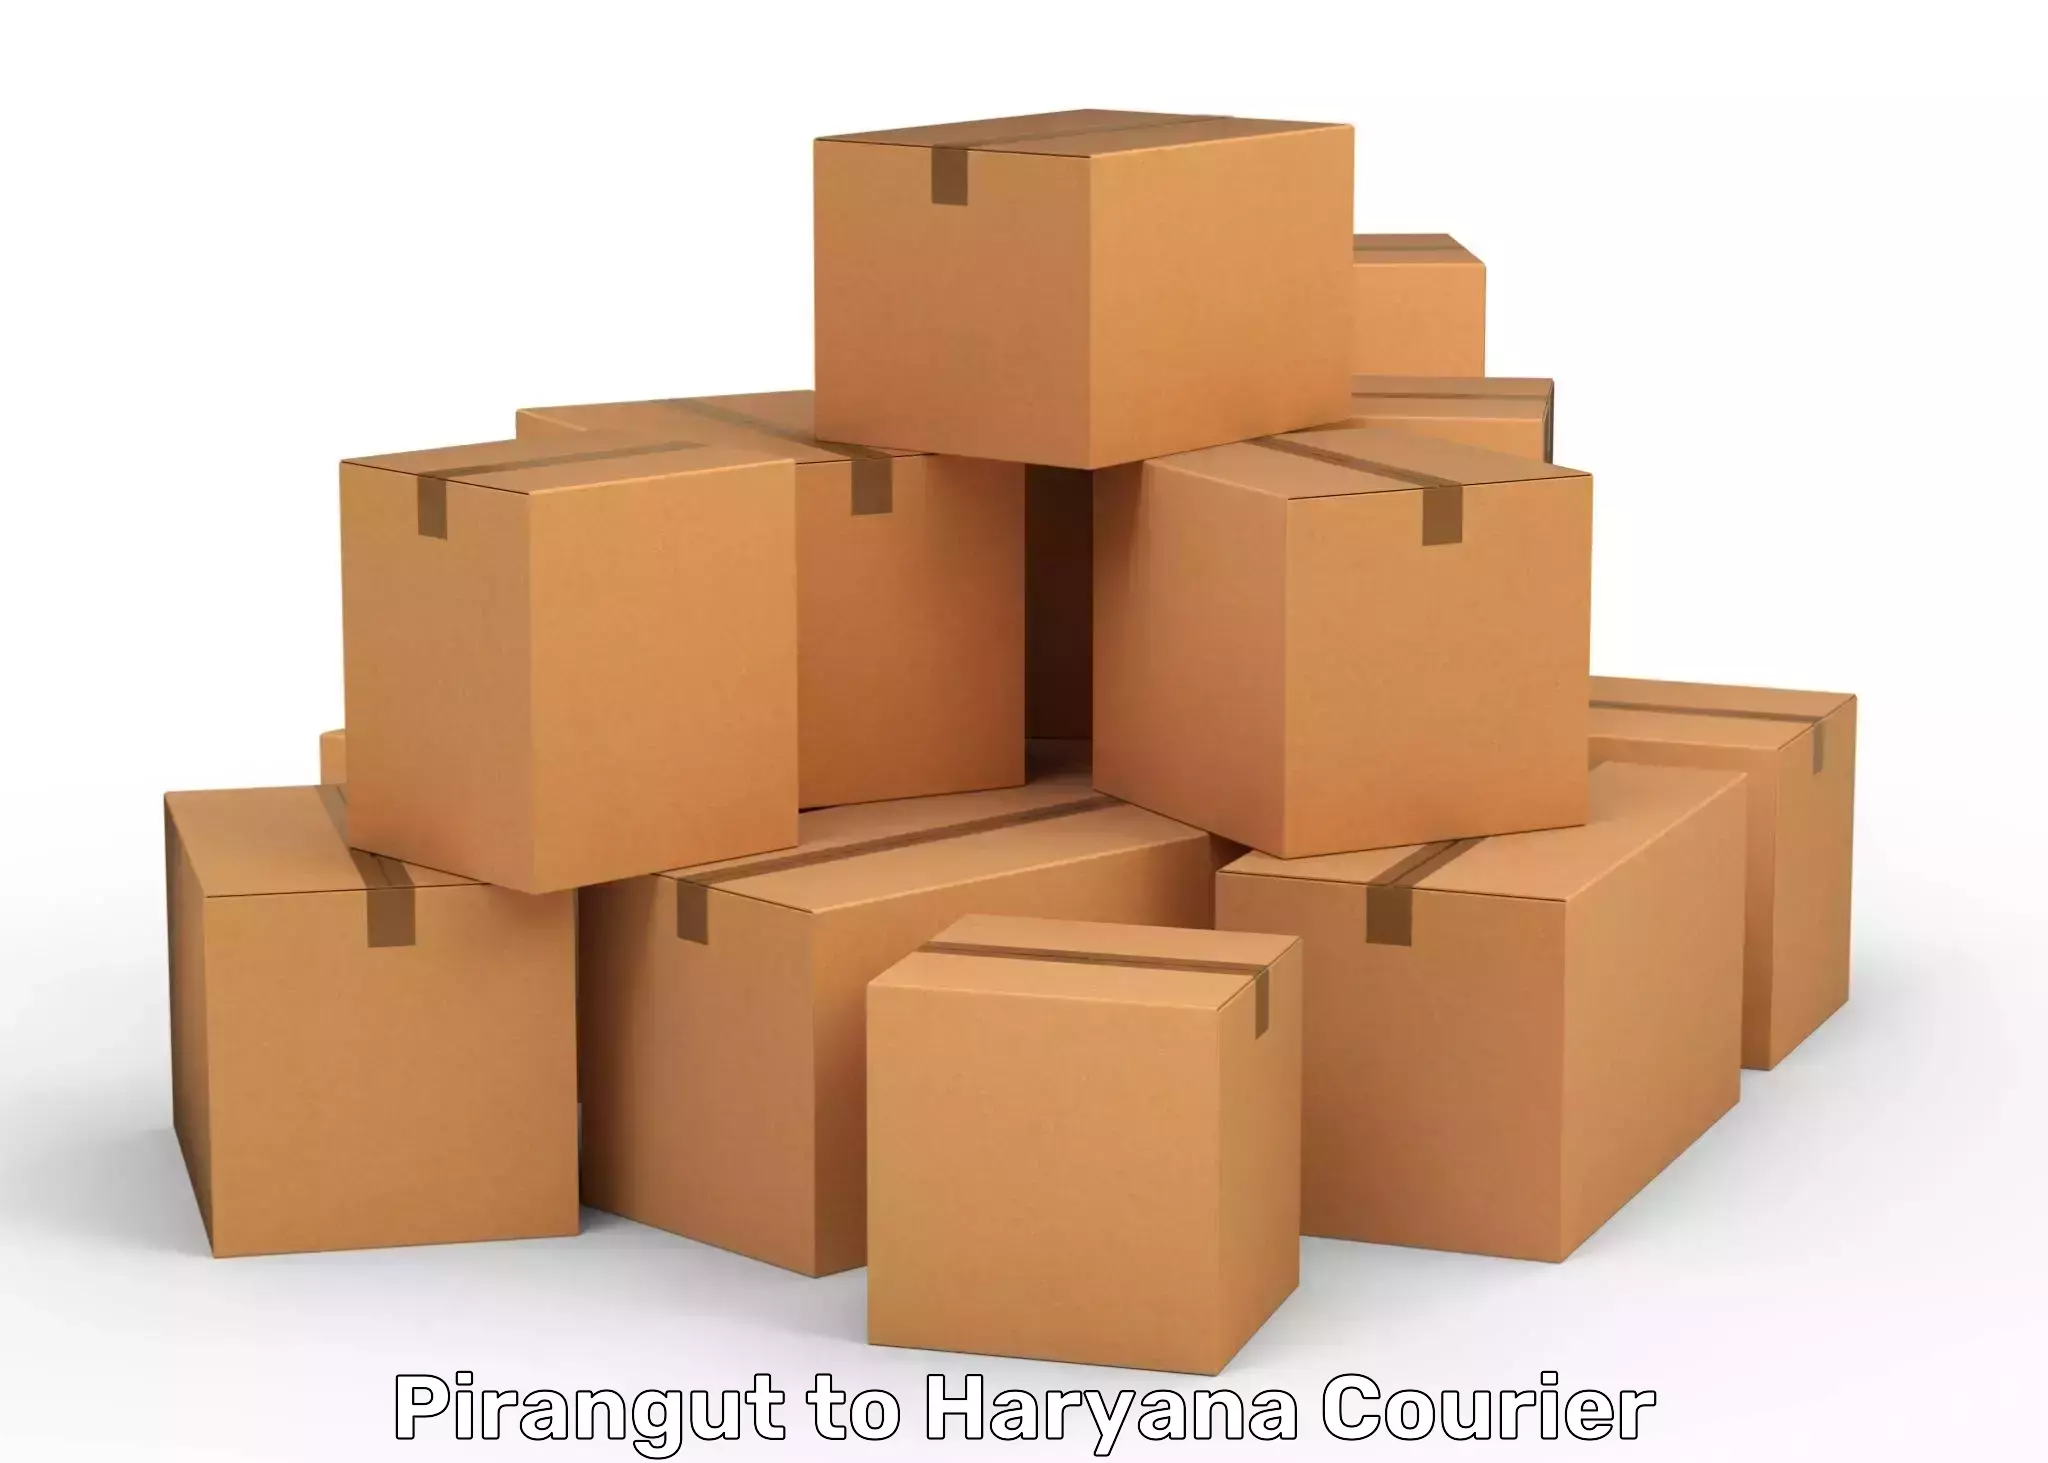 Specialized shipment handling in Pirangut to Gohana